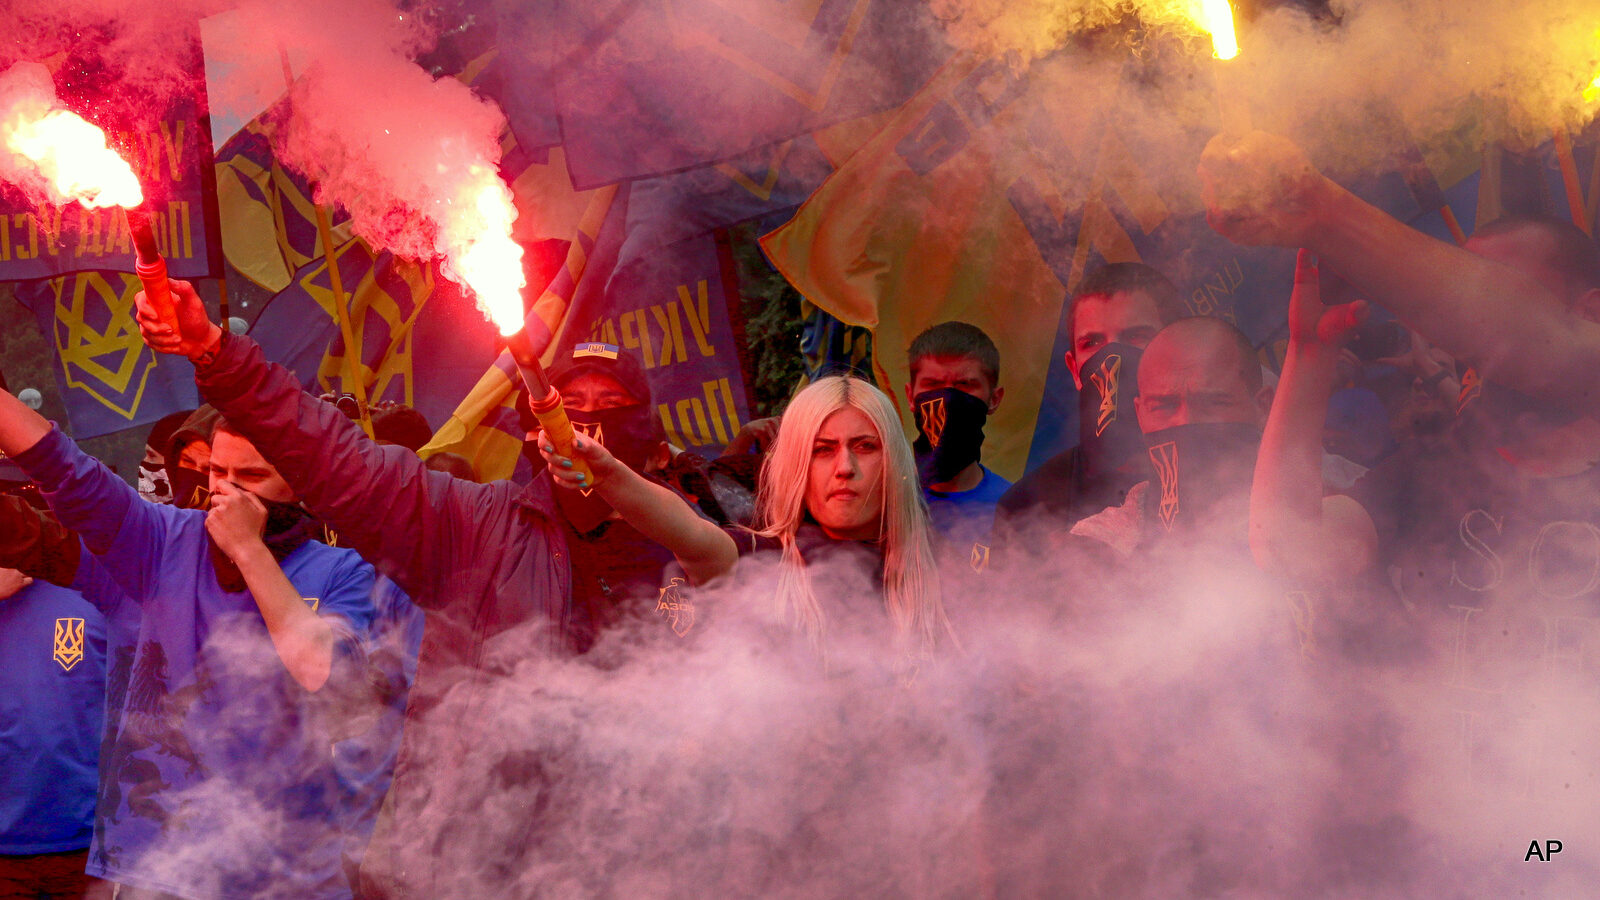 Neo-Nazis in Ukraine